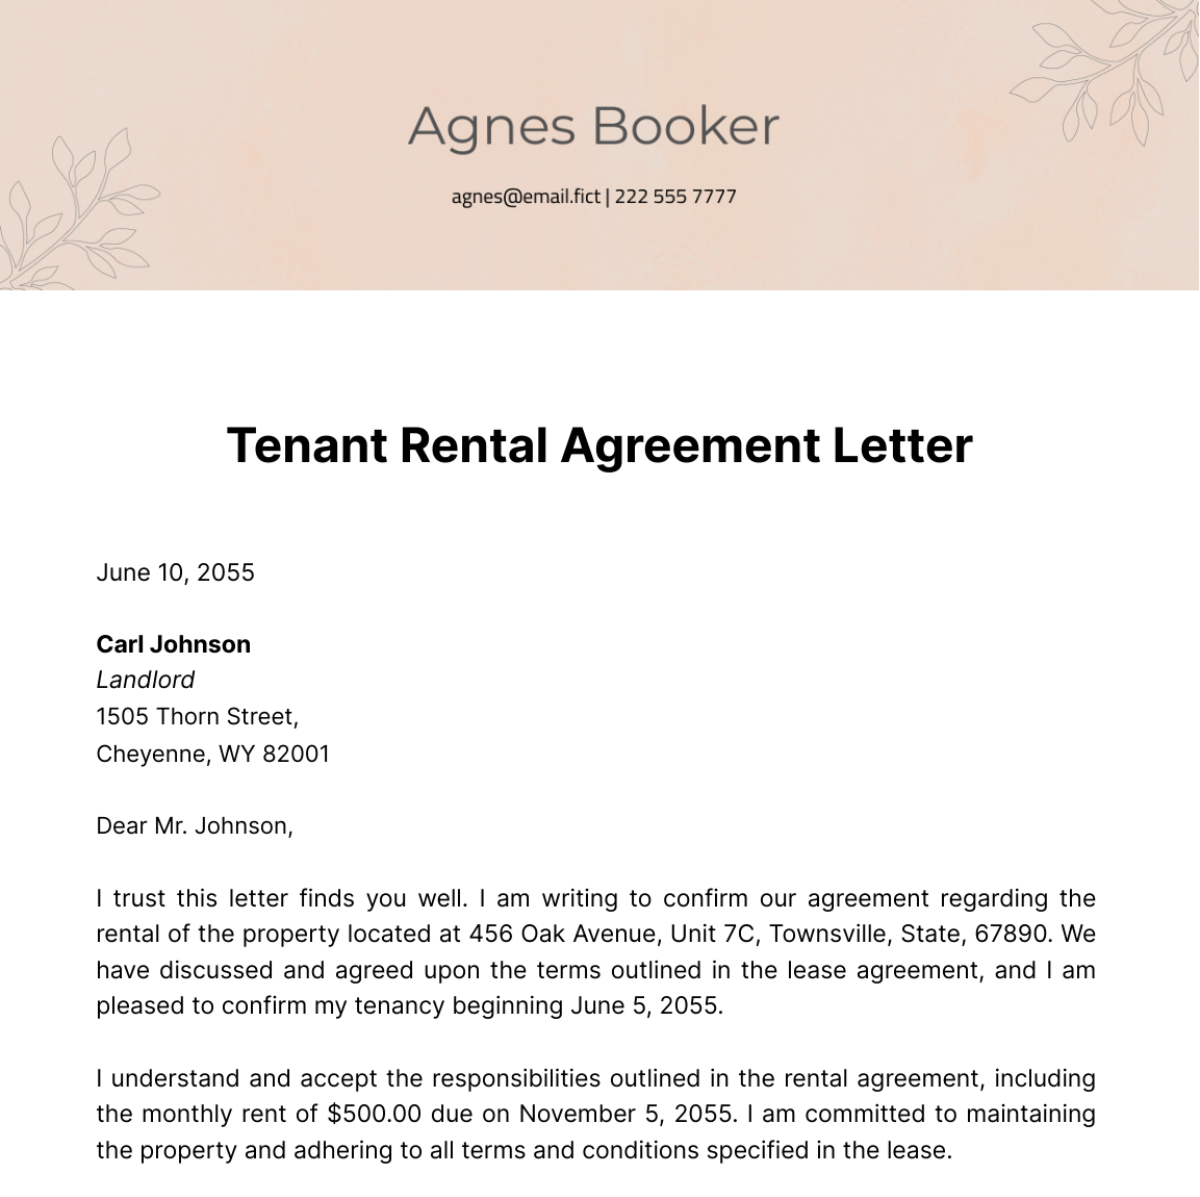 Tenant Rental Agreement Letter Template